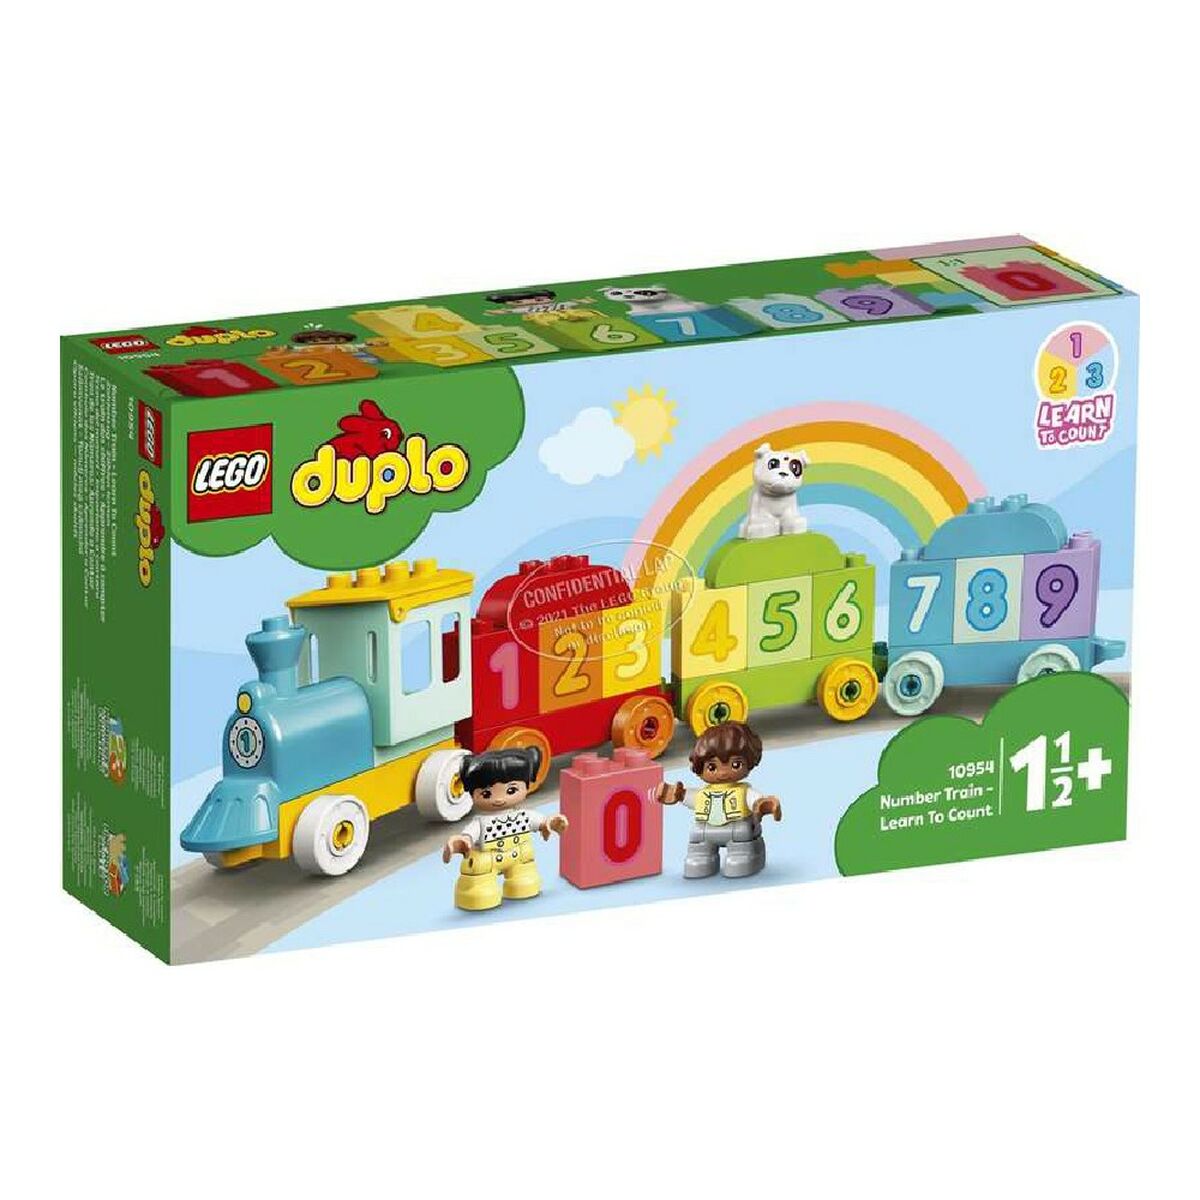 Speelset Duplo Number Train Lego (23 pc's)